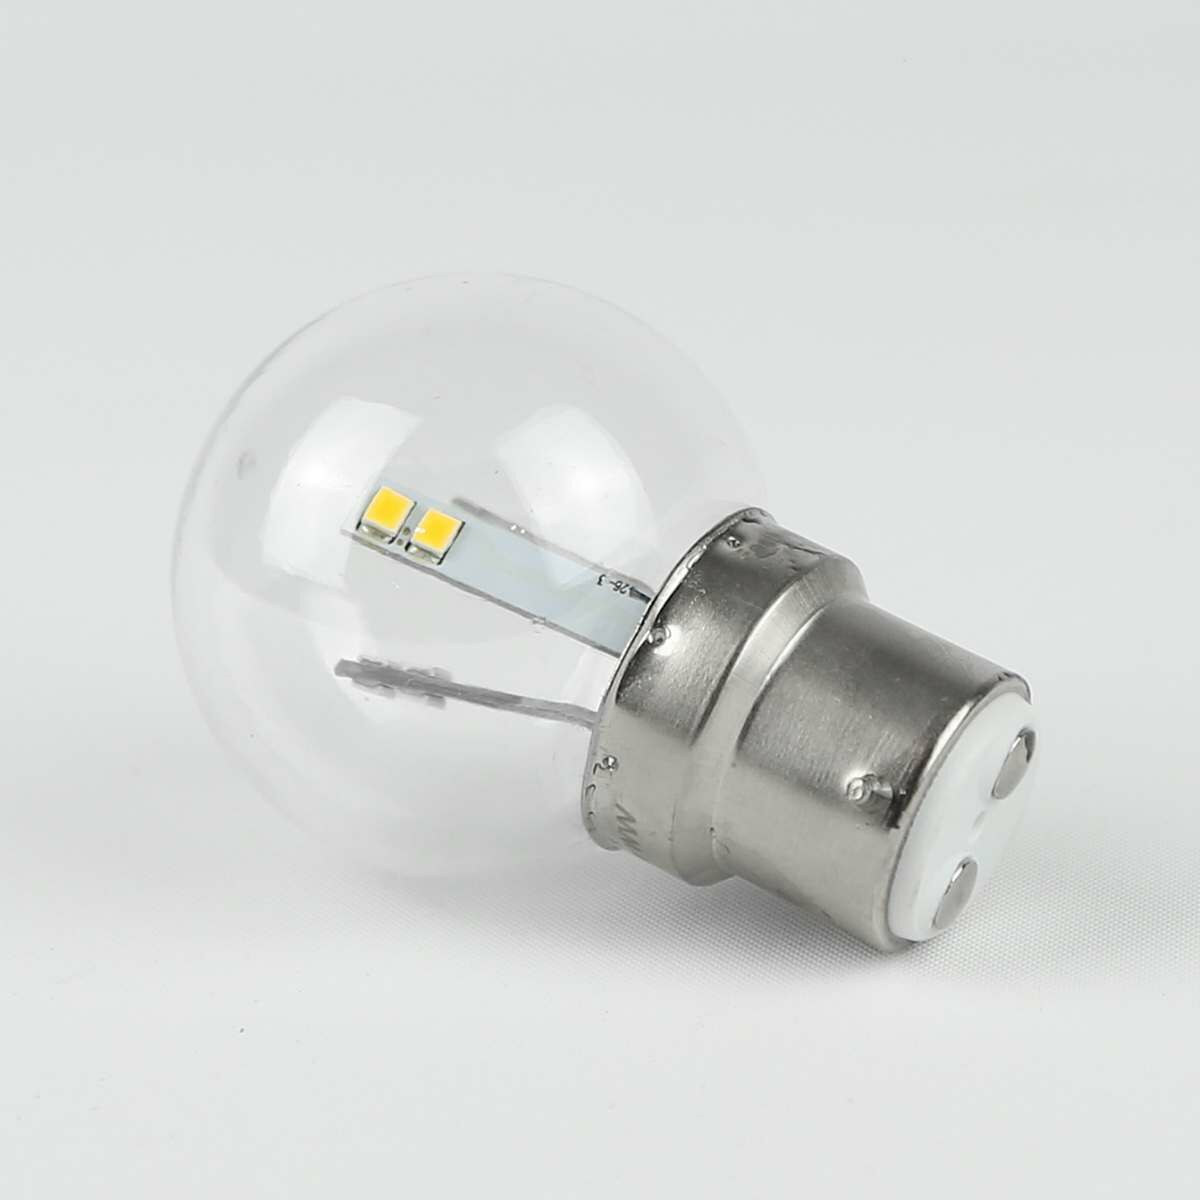 FestoonPro B22 LED High Power Festoon Bulb image 3